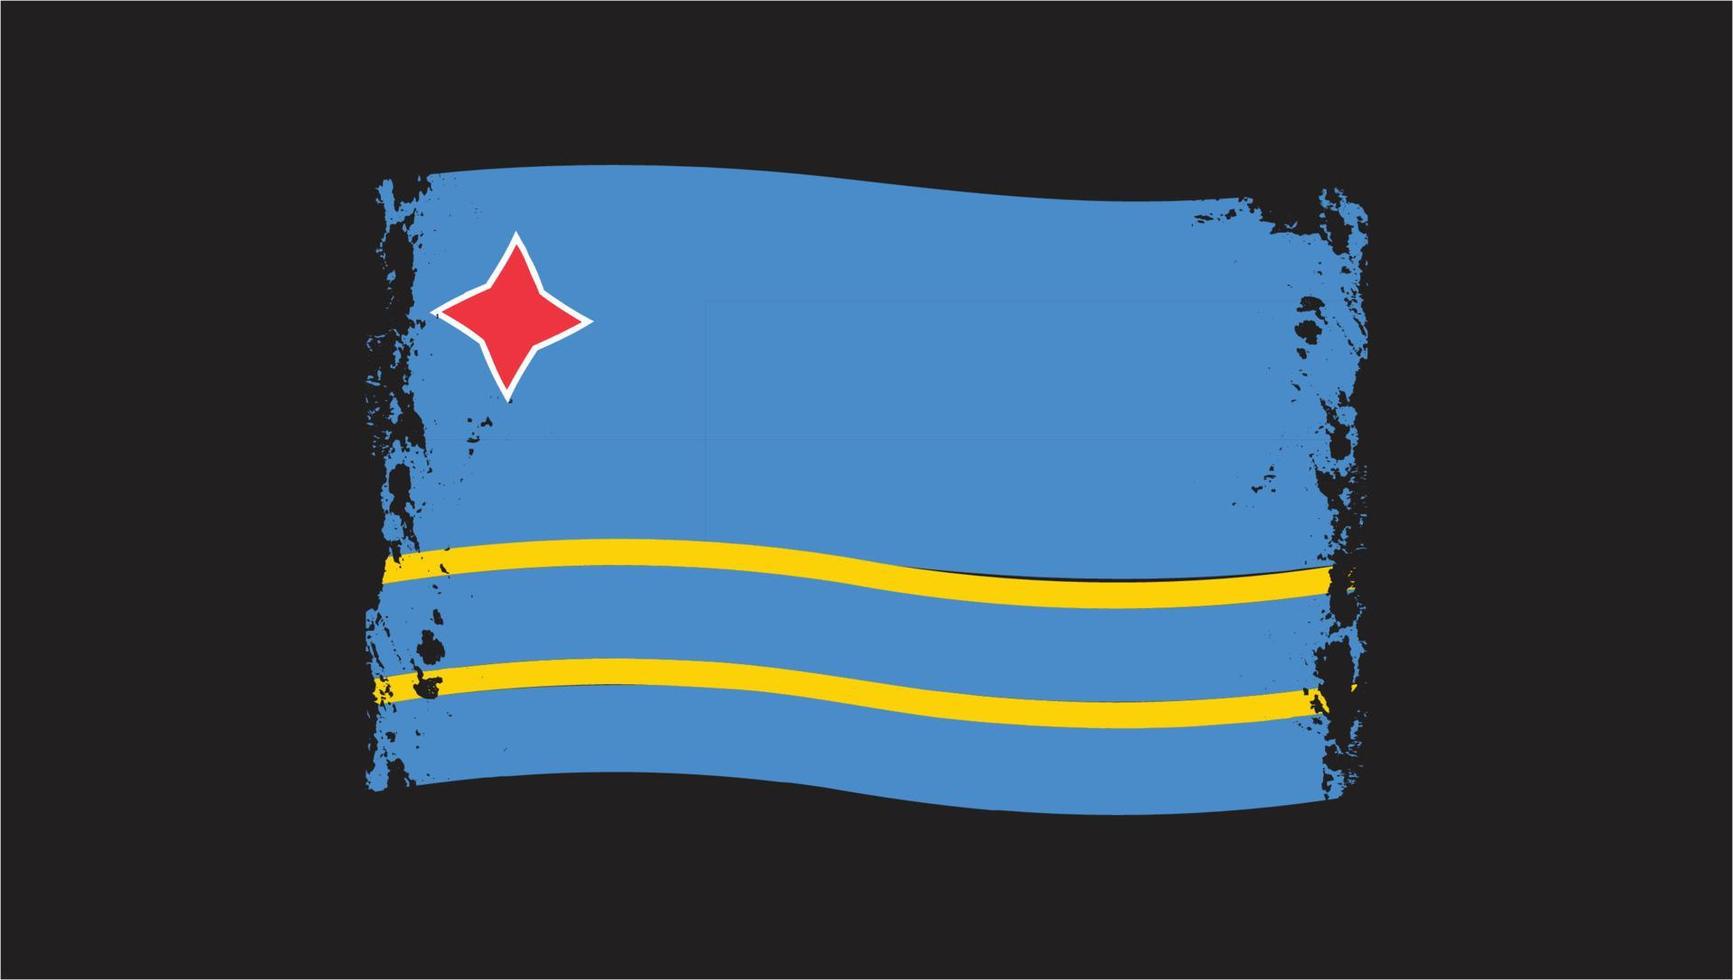 aruba pays pays ondulé drapeau brosse vecteur